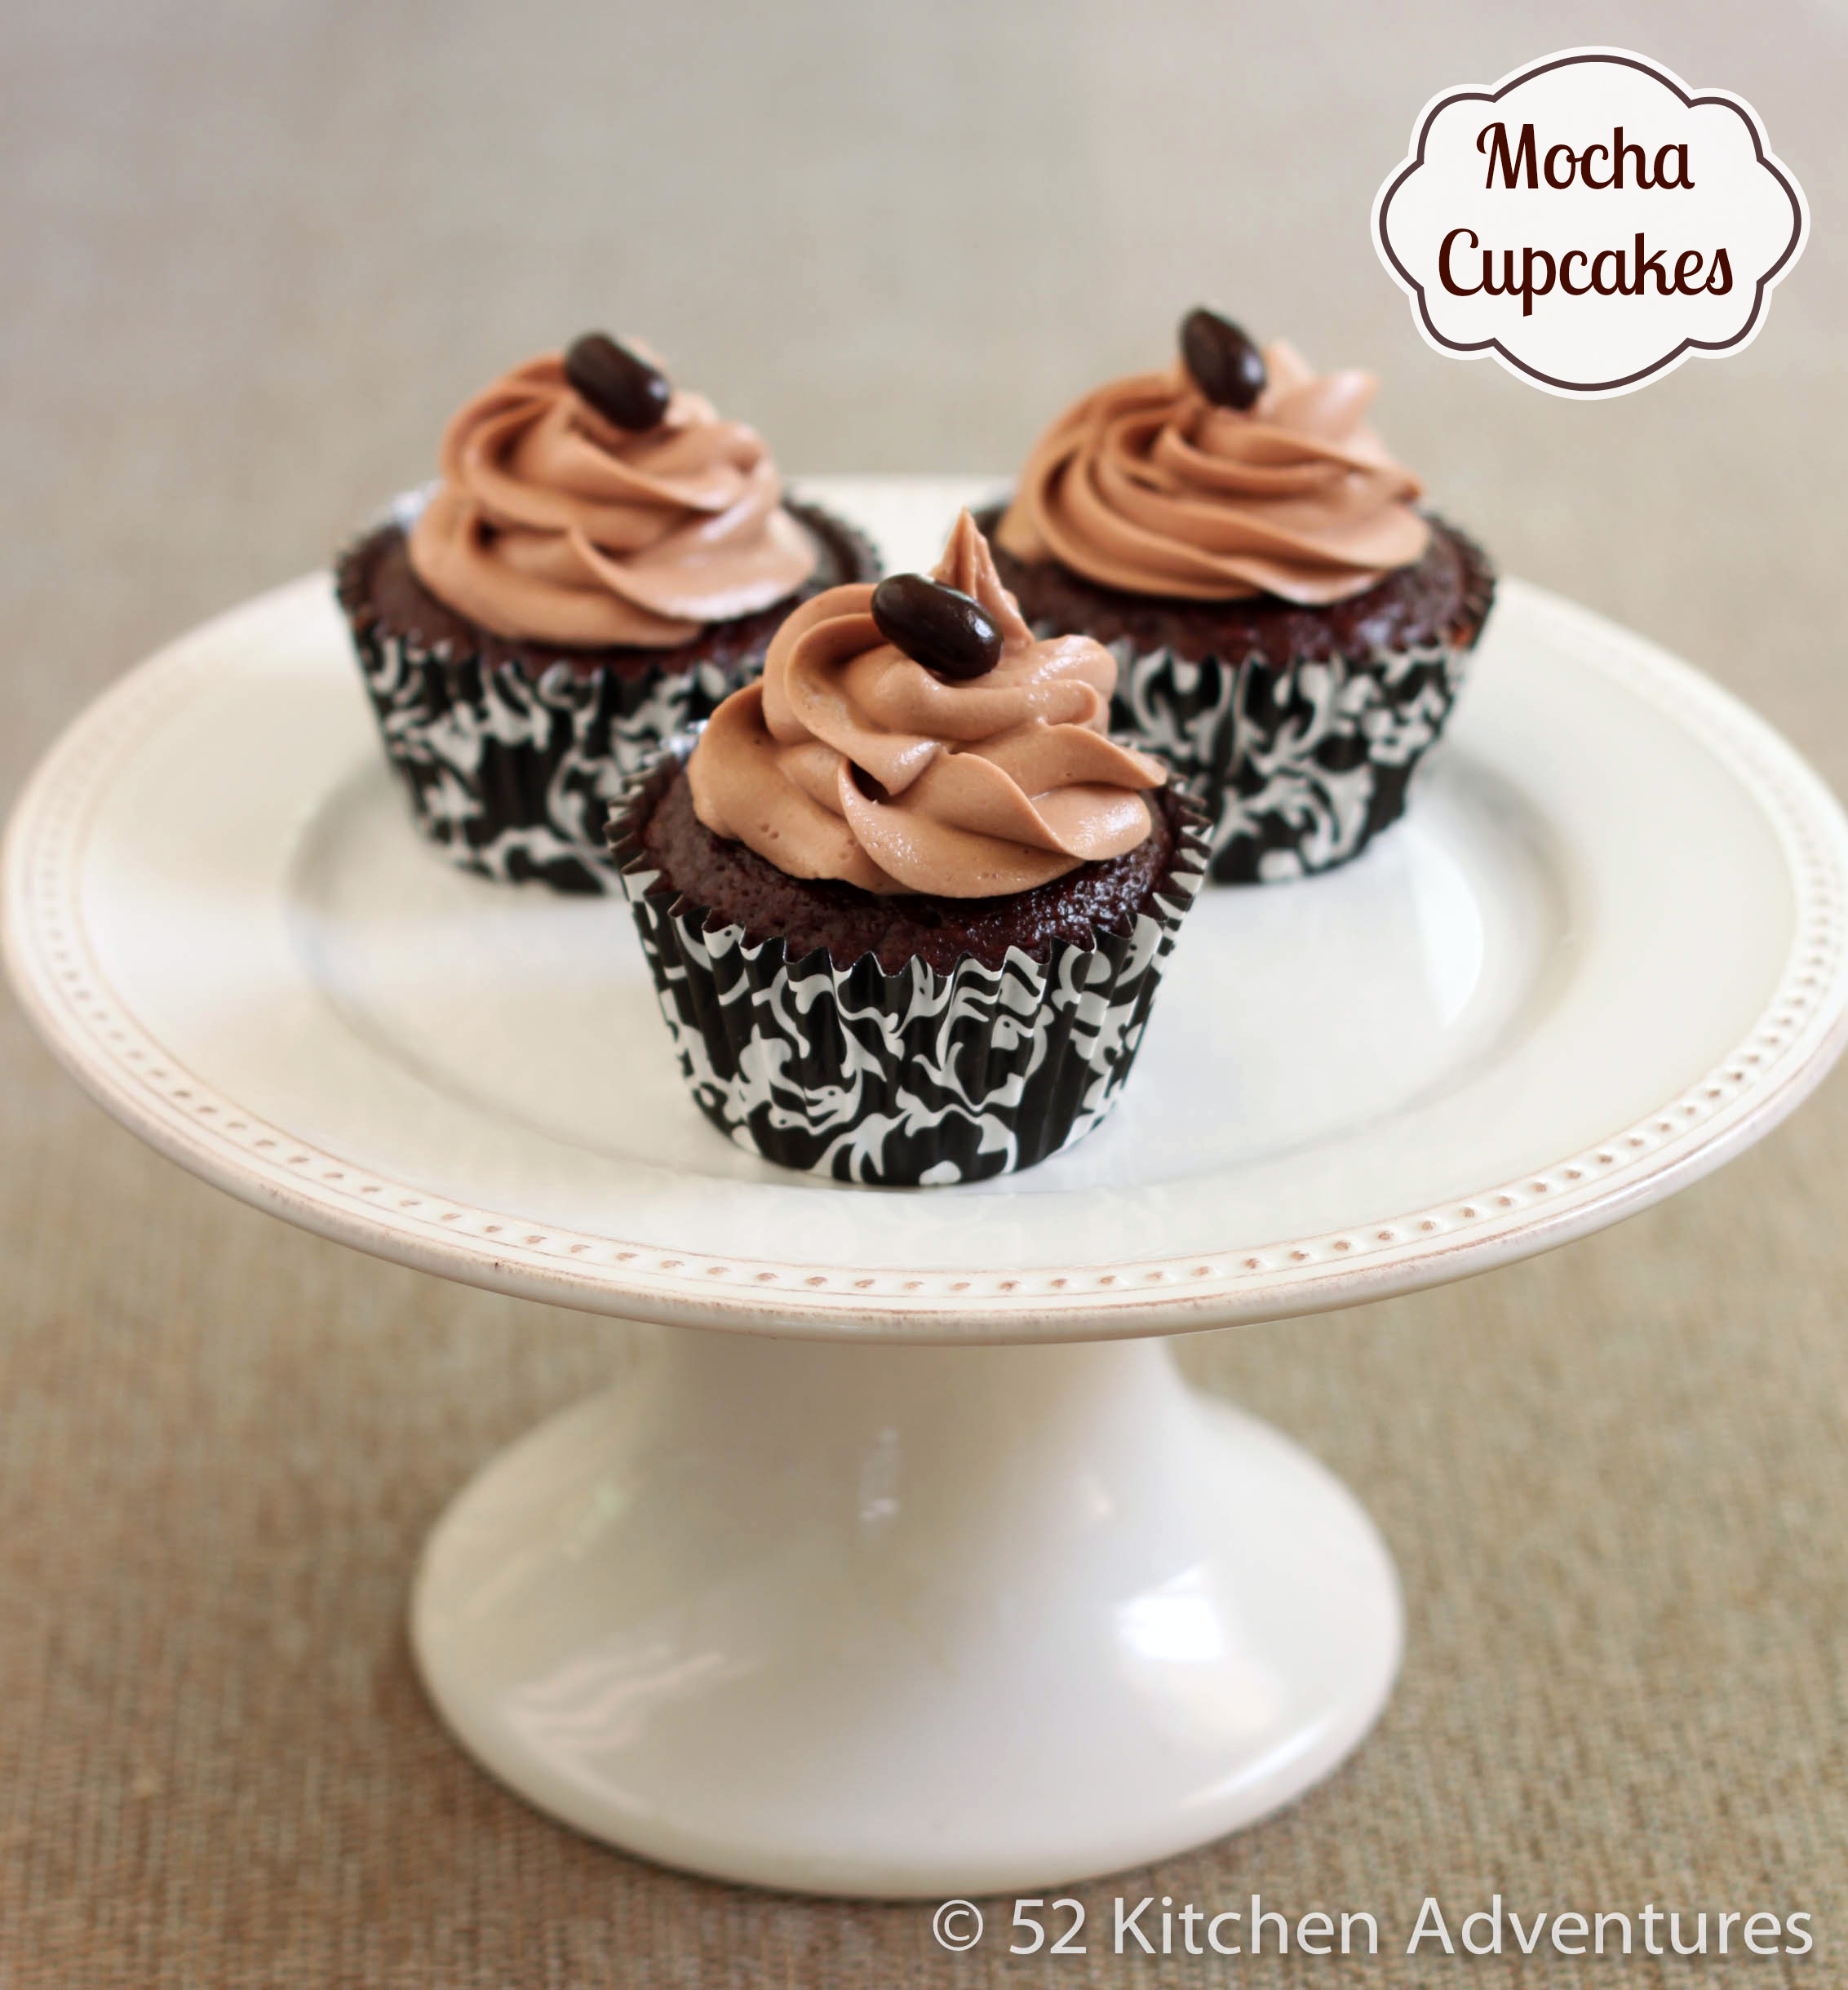 Mocha Cupcakes